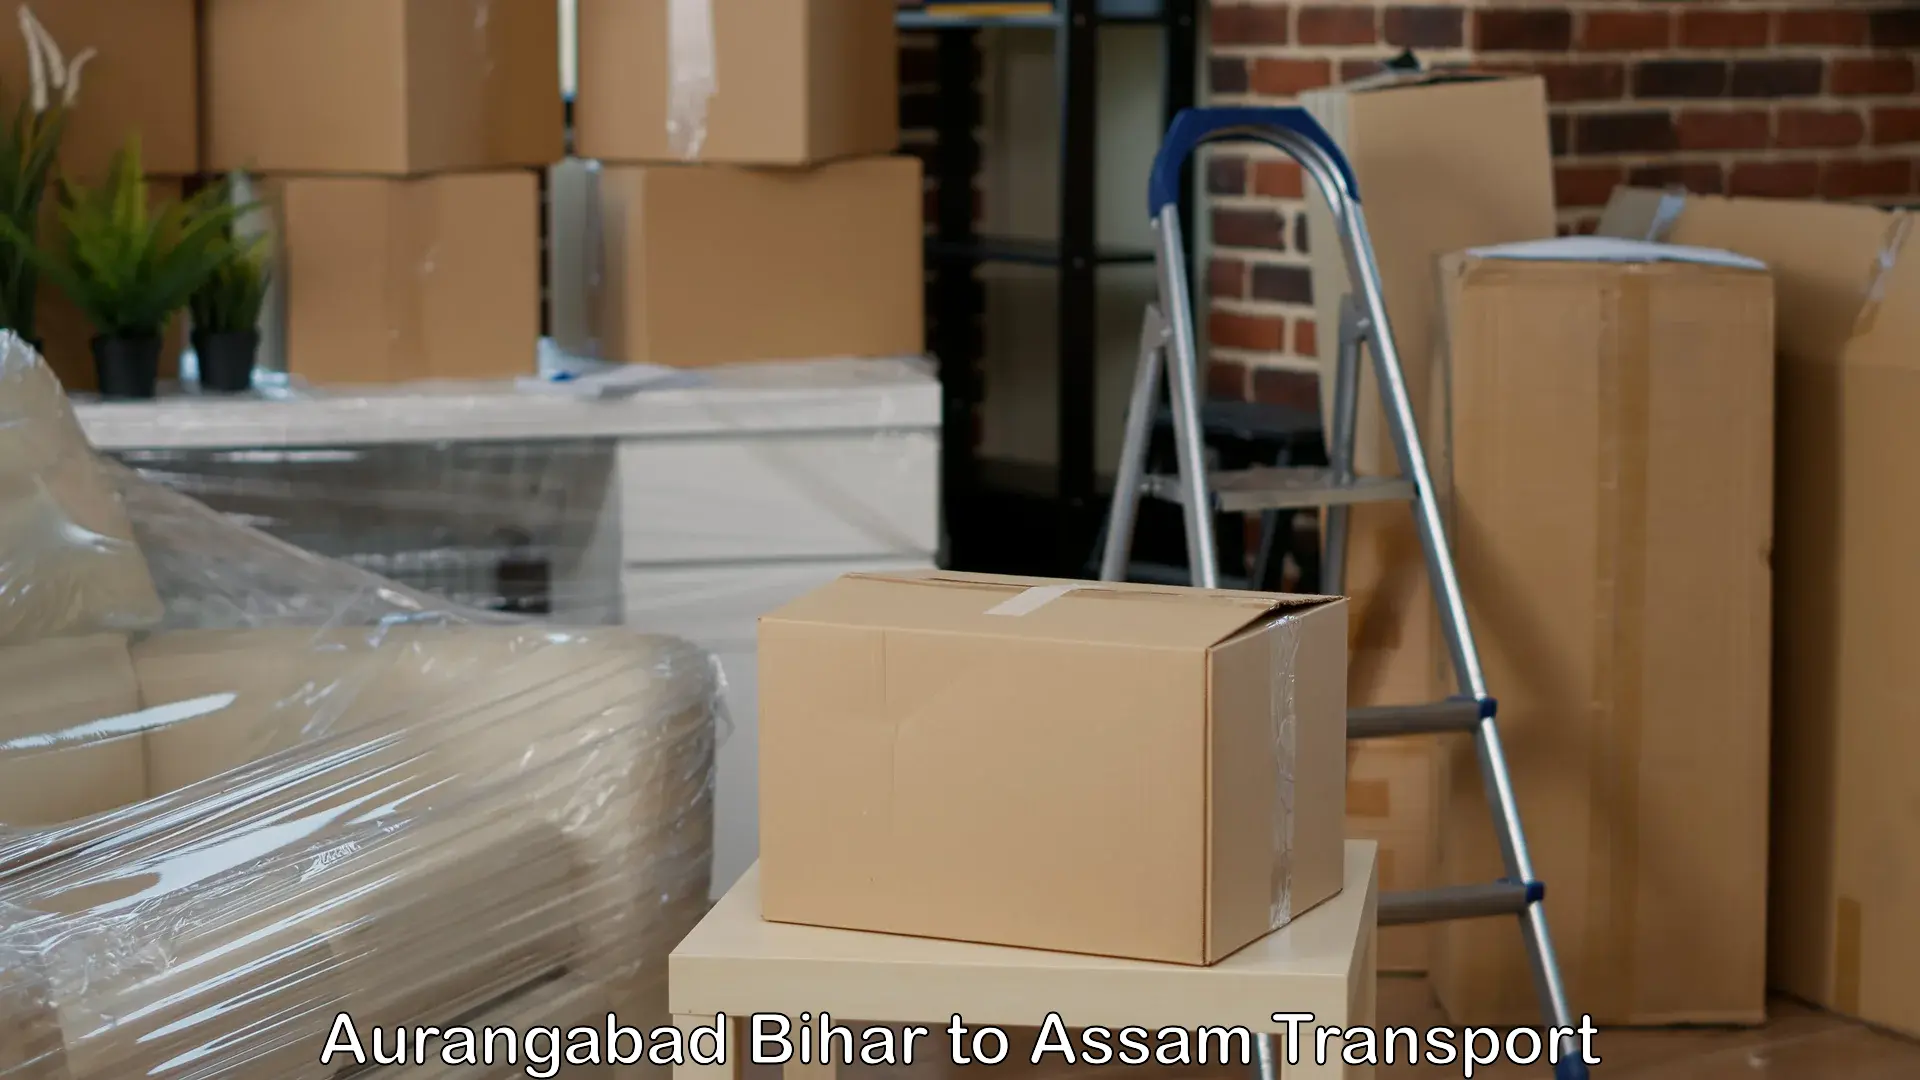 Daily parcel service transport Aurangabad Bihar to Guwahati University